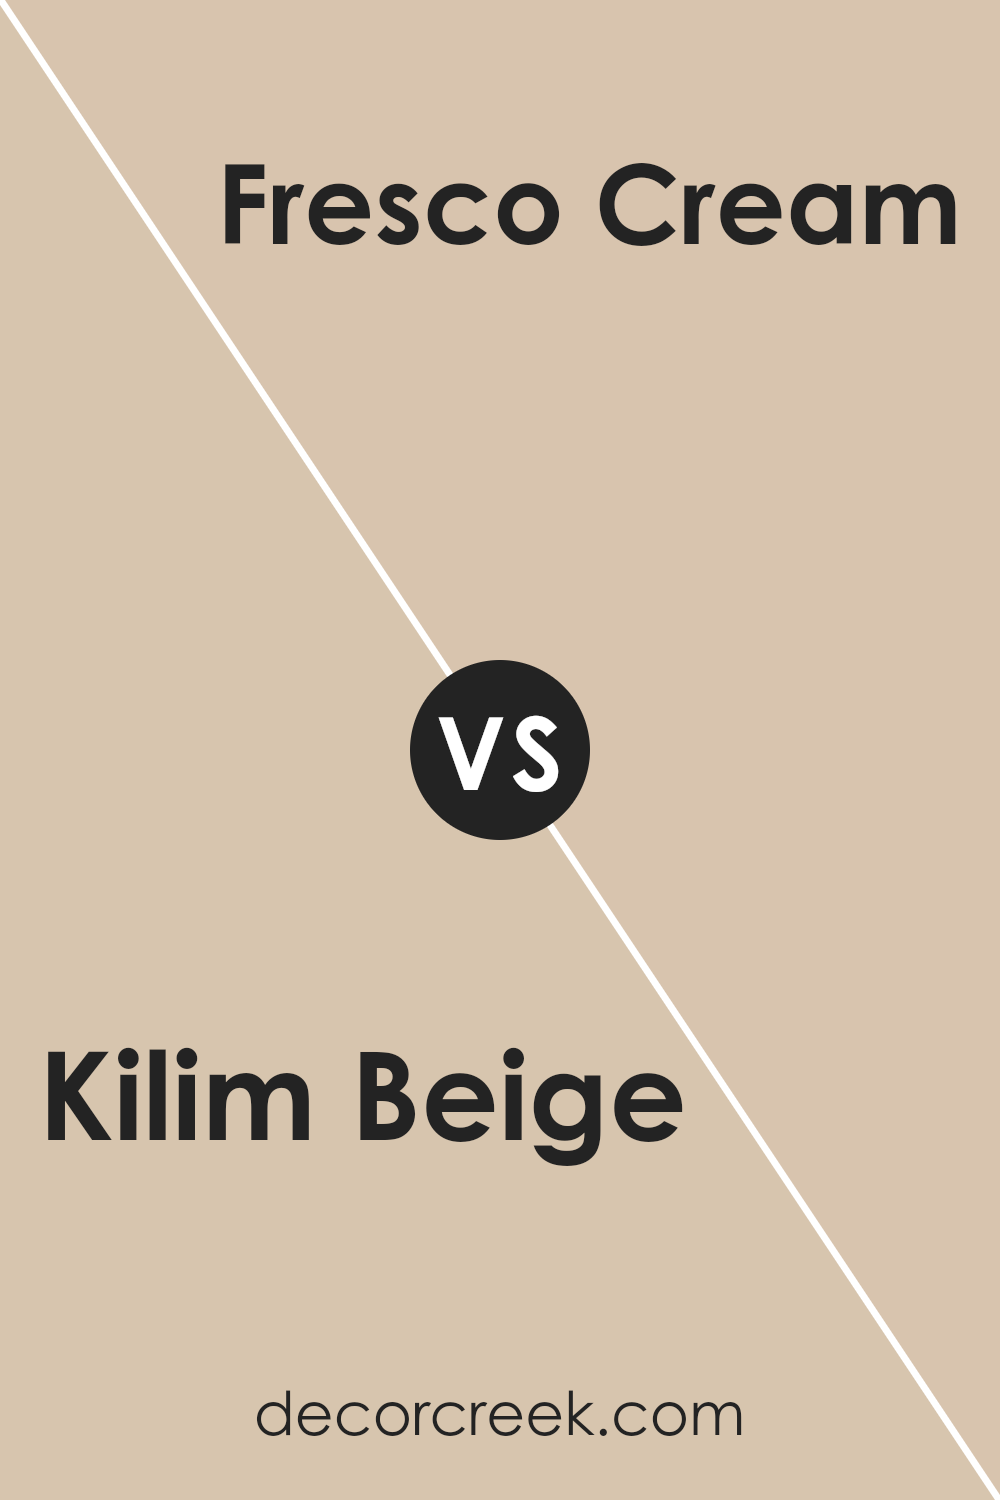 kilim_beige_sw_6106_vs_fresco_cream_sw_7719